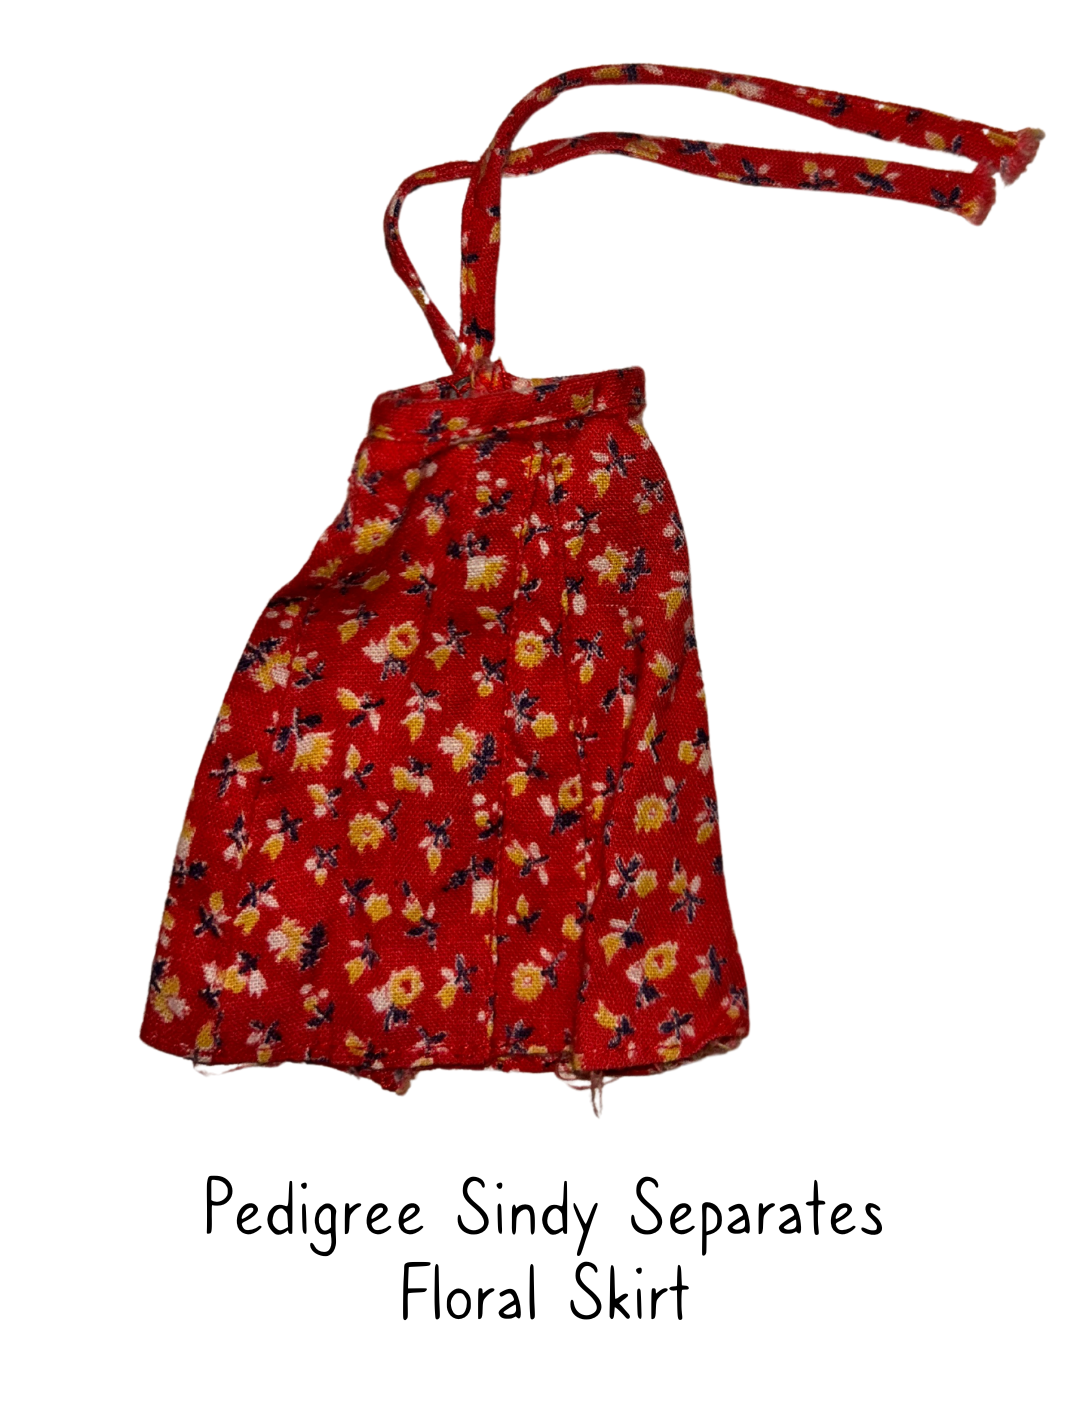 1982 Pedigree Sindy Doll Separates Floral Skirt